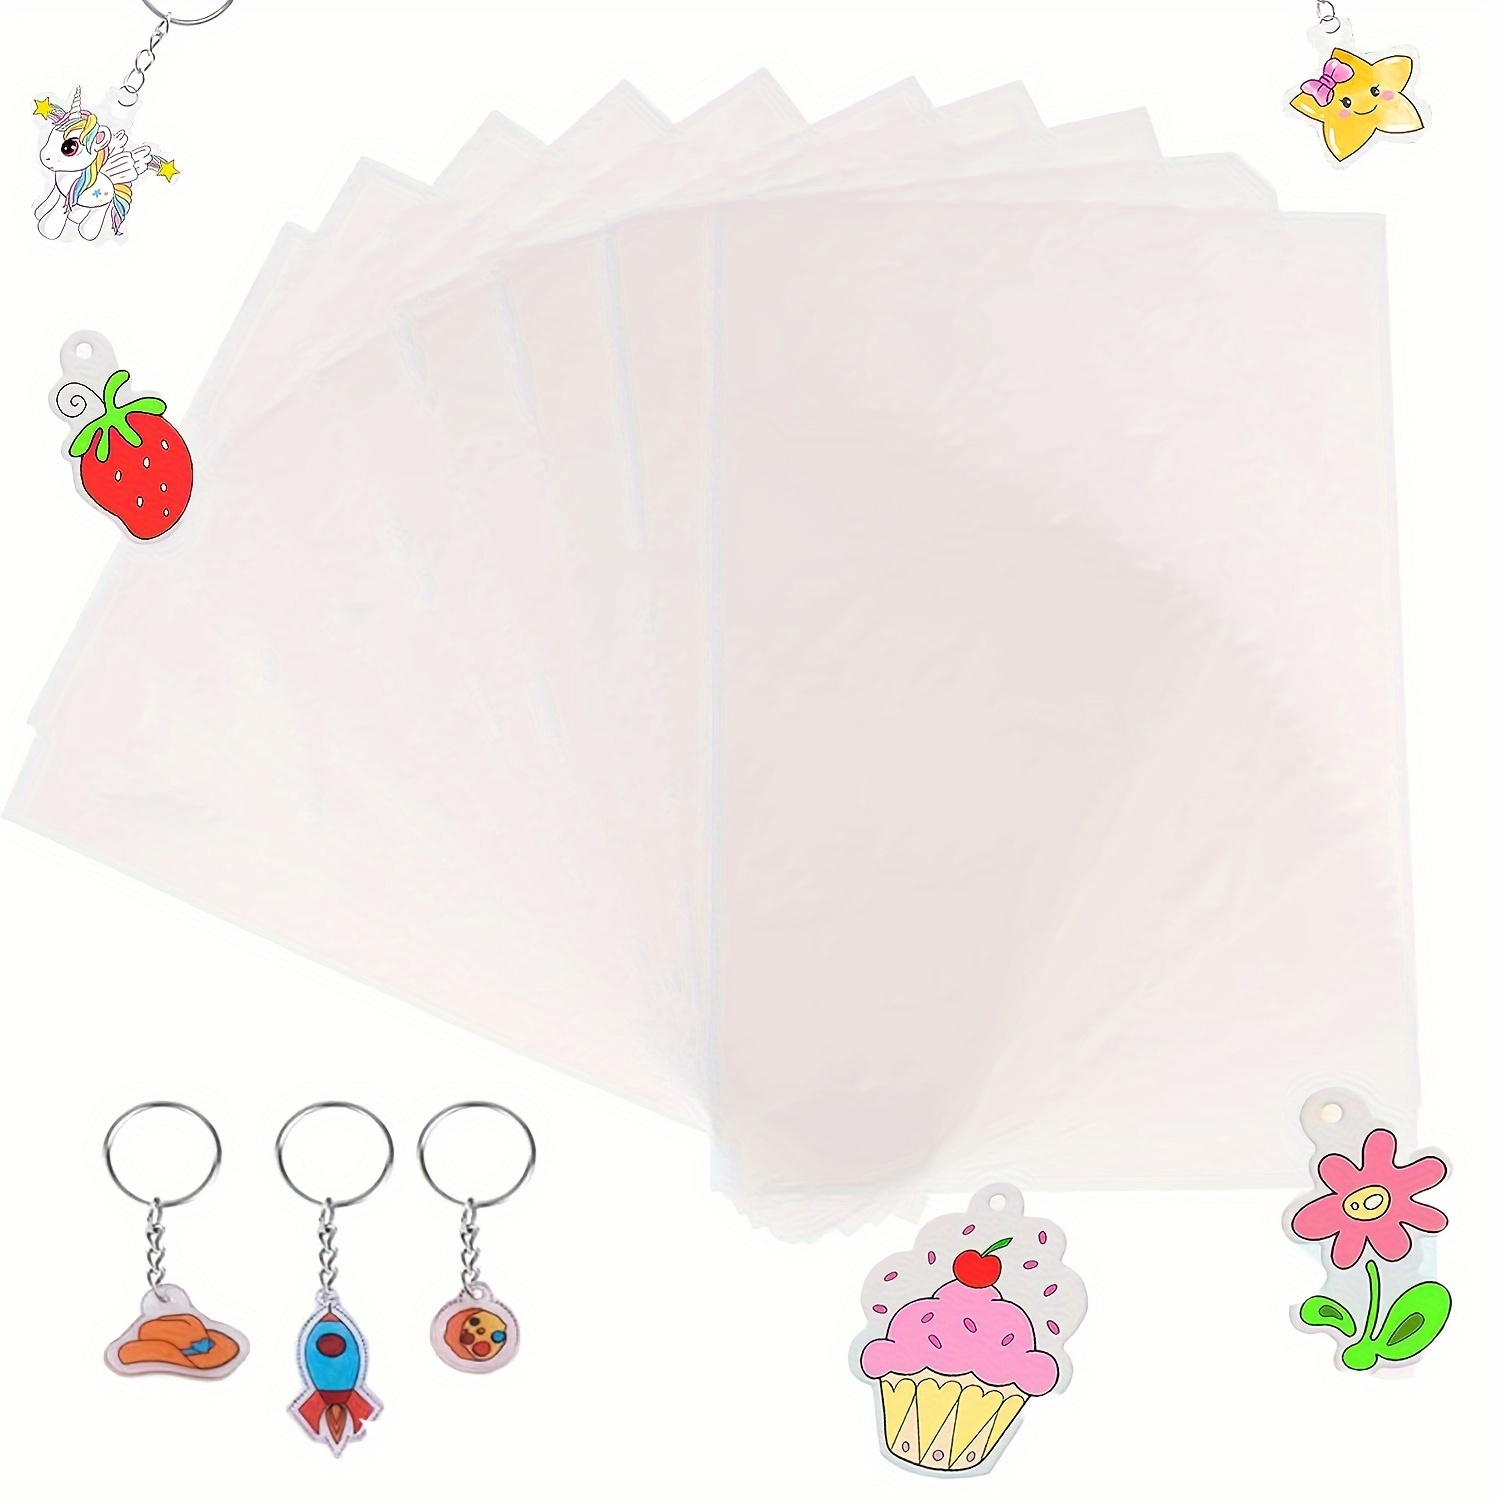 Shrink Plastic Sheets Kit For Shrinky Dink Craft Making, 143pcs Shrink Art  Kit Include 15 Pcs Shrink Film Paper With 128 Pcs Keychains, Pencils, Hole